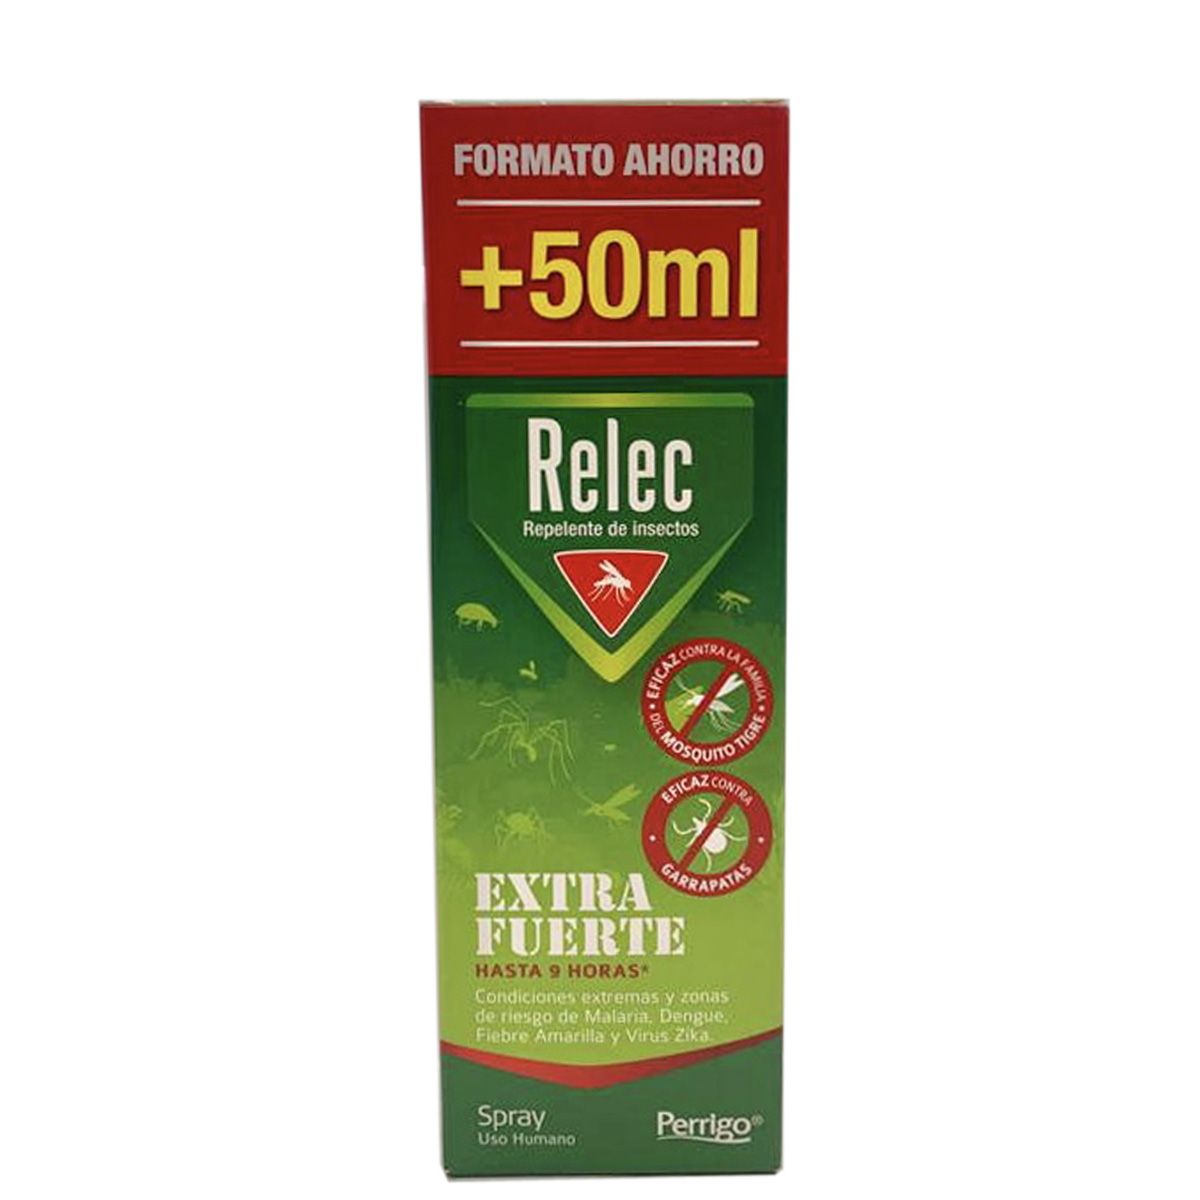 Relec Extra Fuerte Spray 75ml + 50ml Formato Ahorro